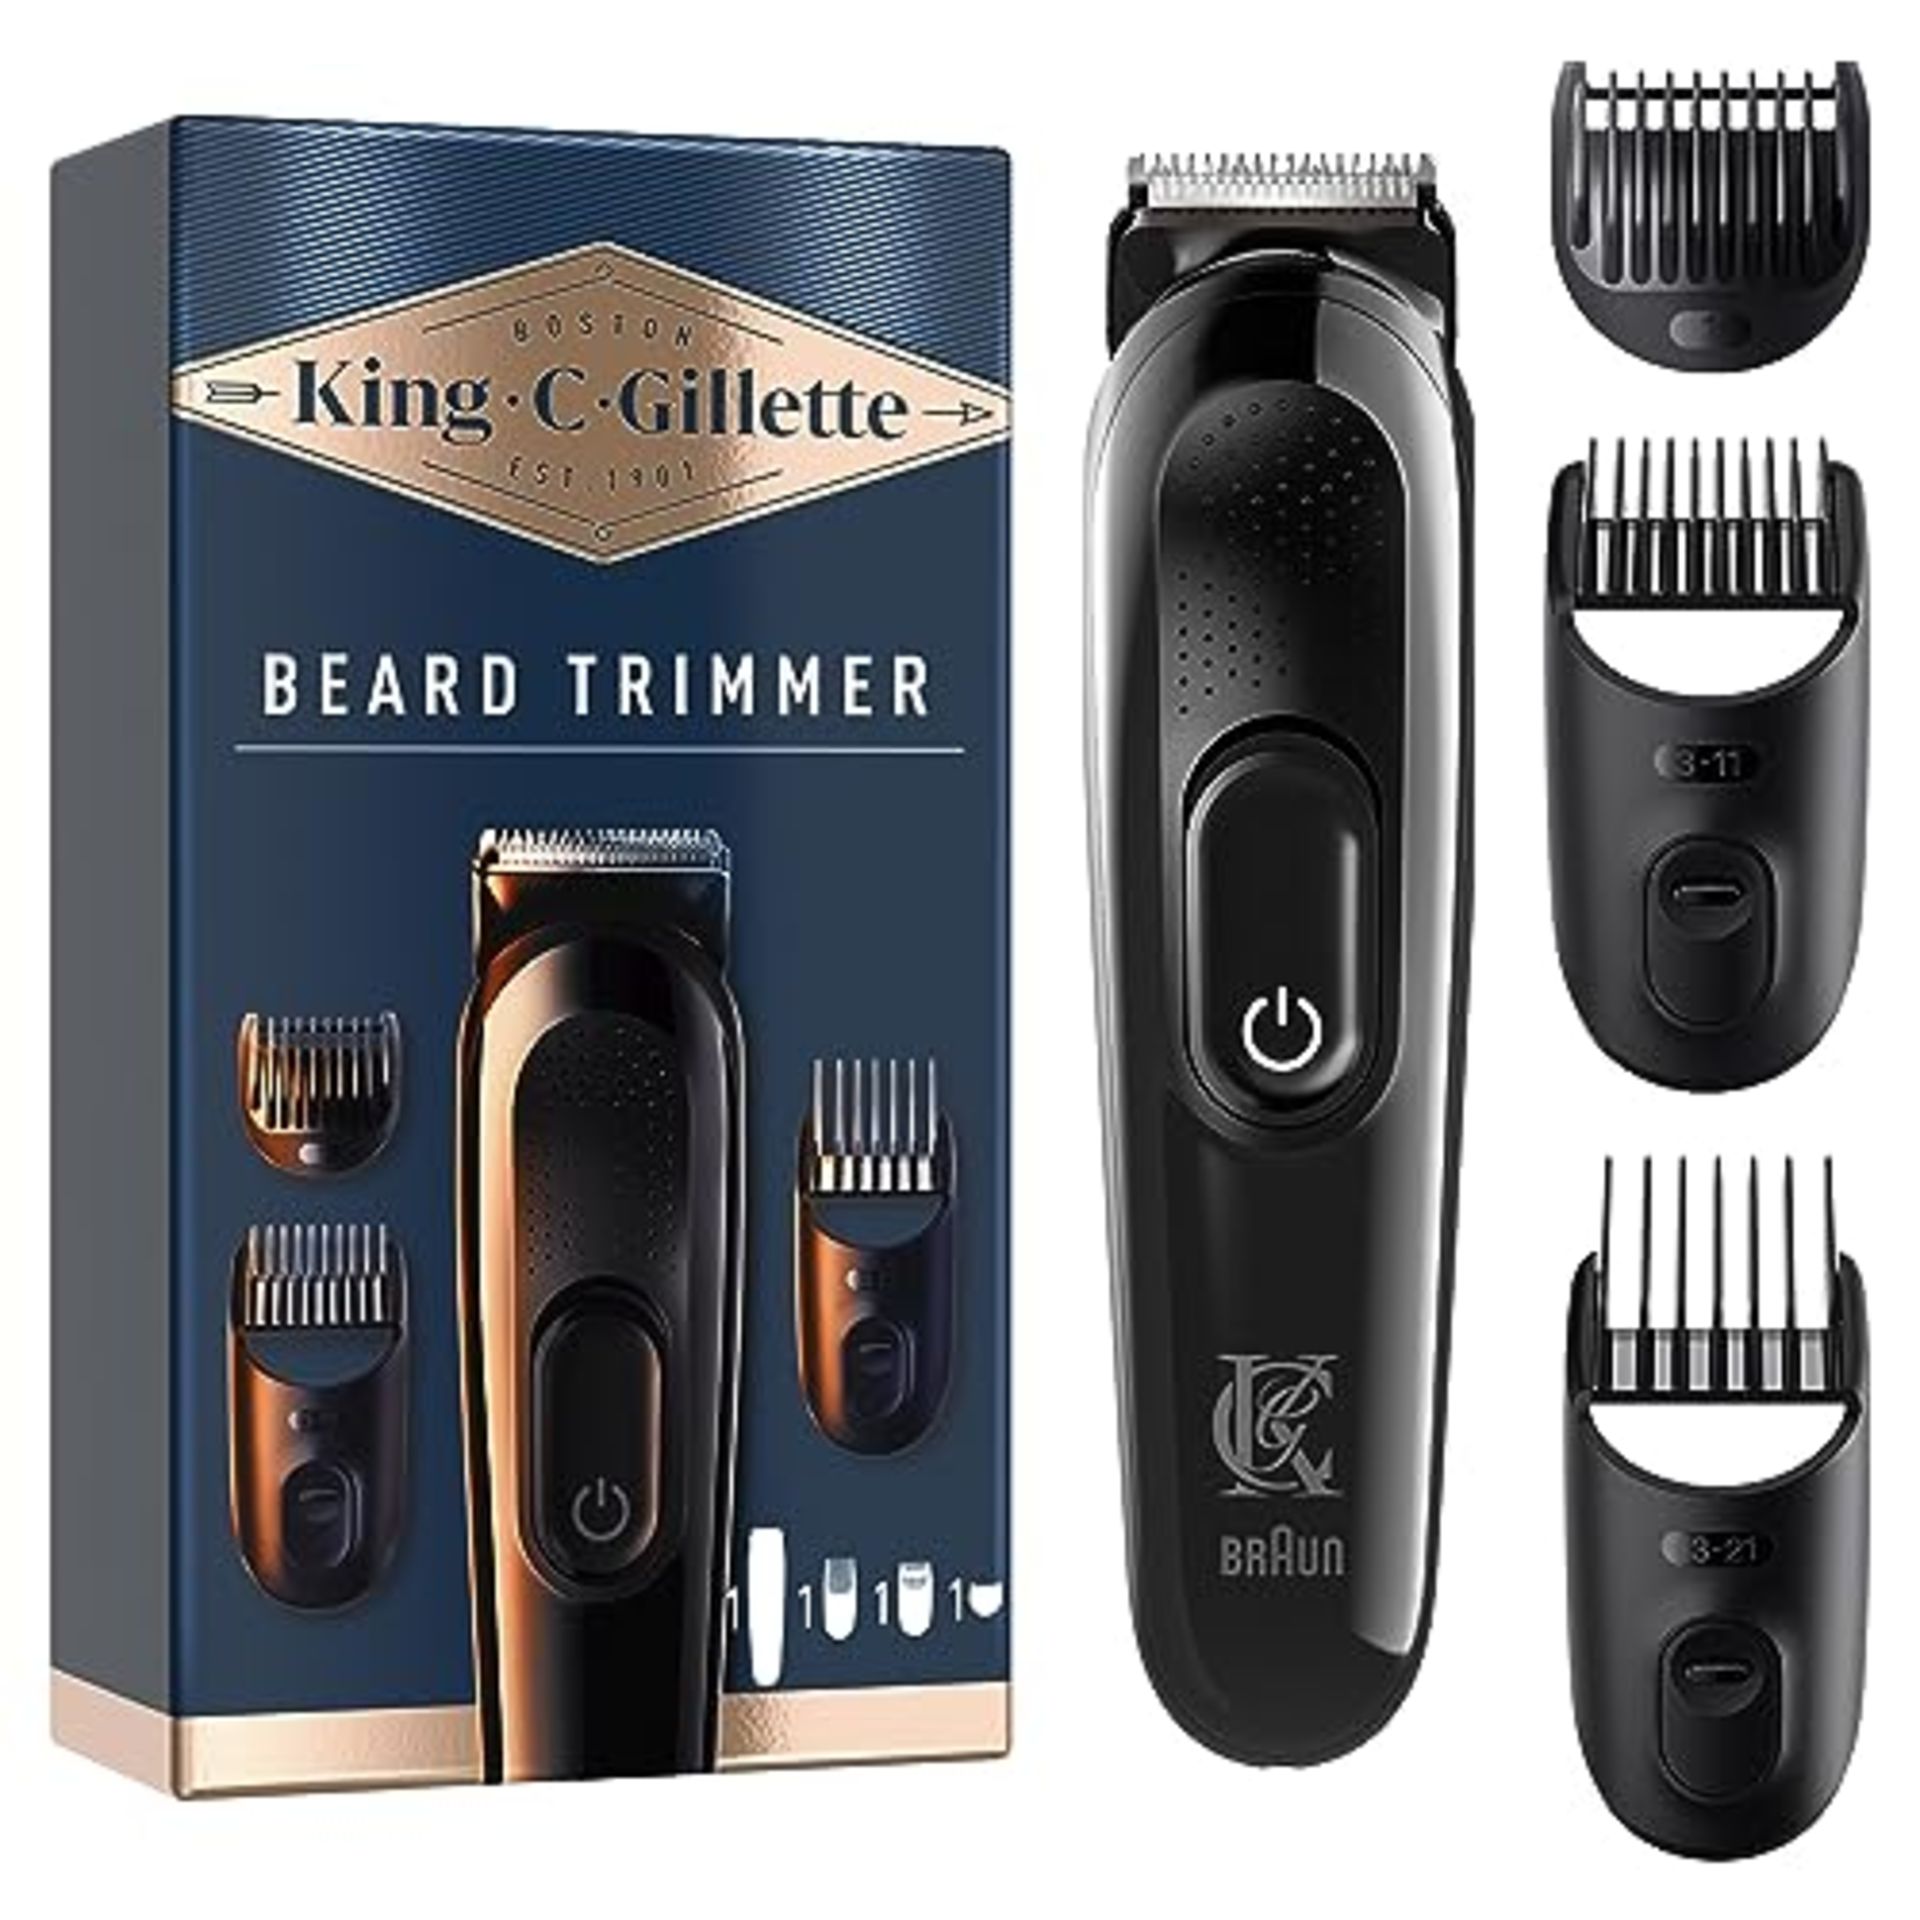 King C. Gillette Men's Beard Trimmer Kit, 1 Head, 3 Adjustable Combs, 1 Brush, 1 Charg